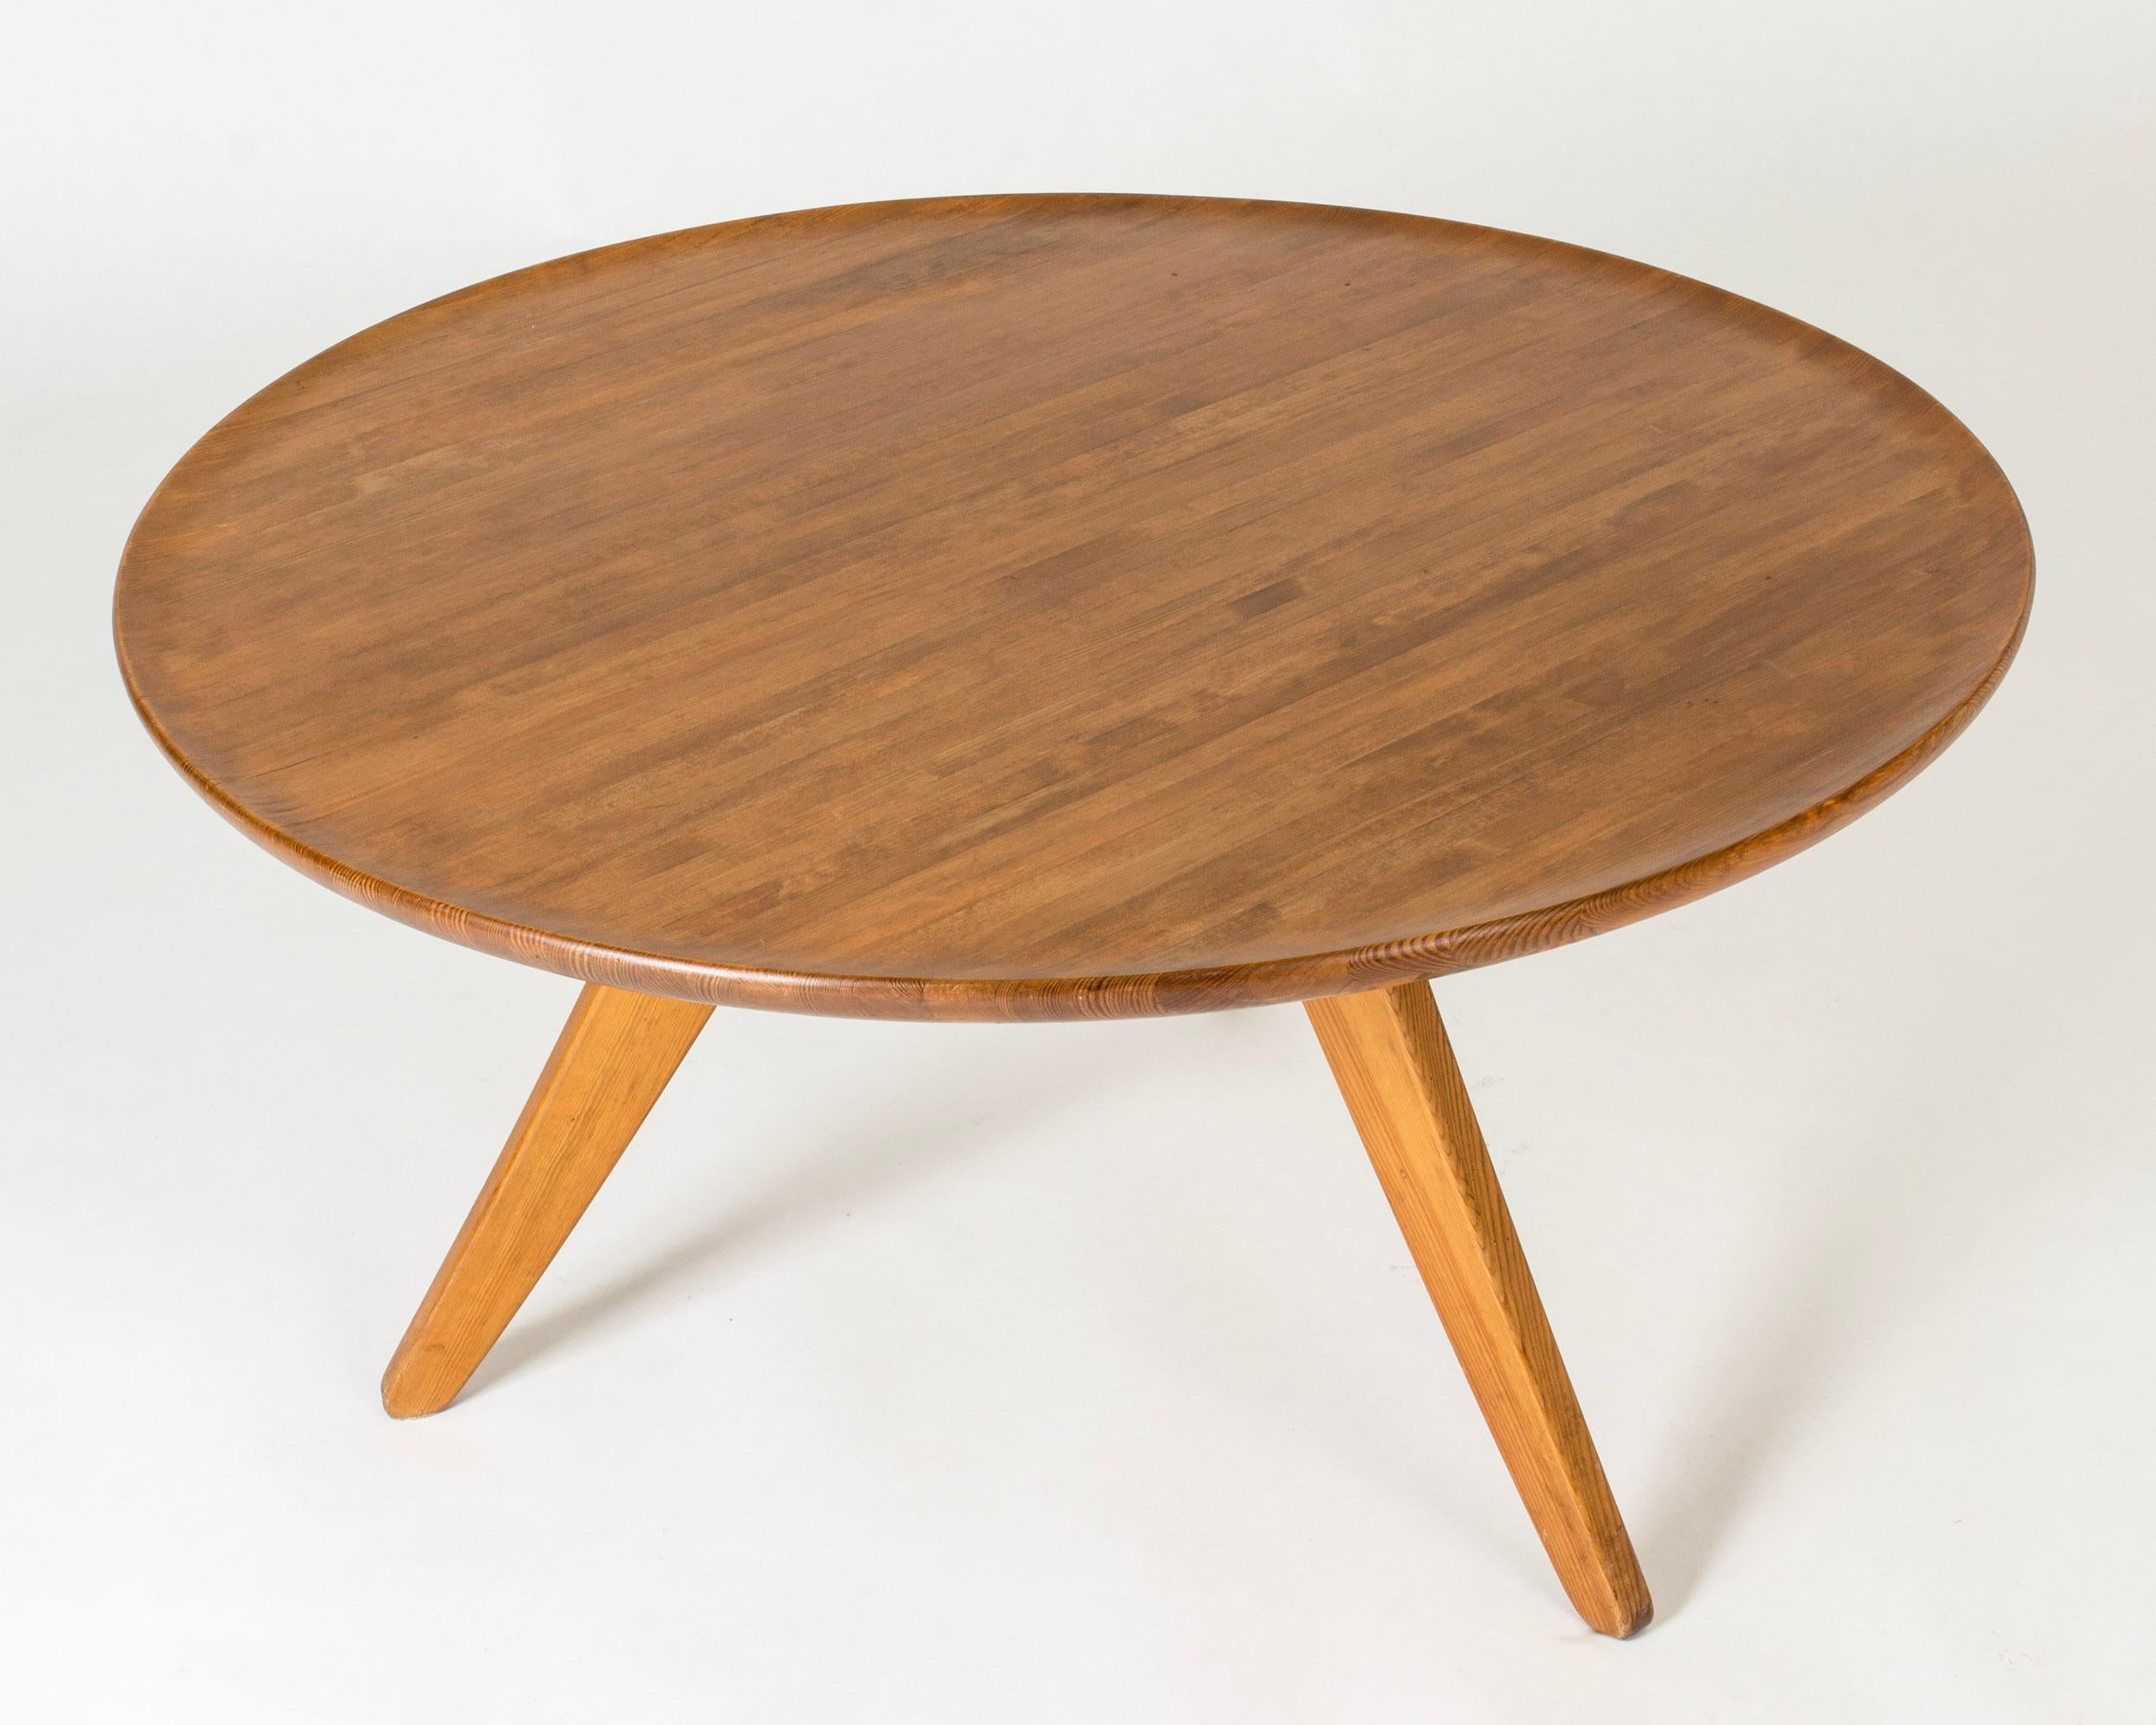 Scandinavian Modern Midcentury Pine Coffee Table by Carl Malmsten, Sweden, 1940s For Sale